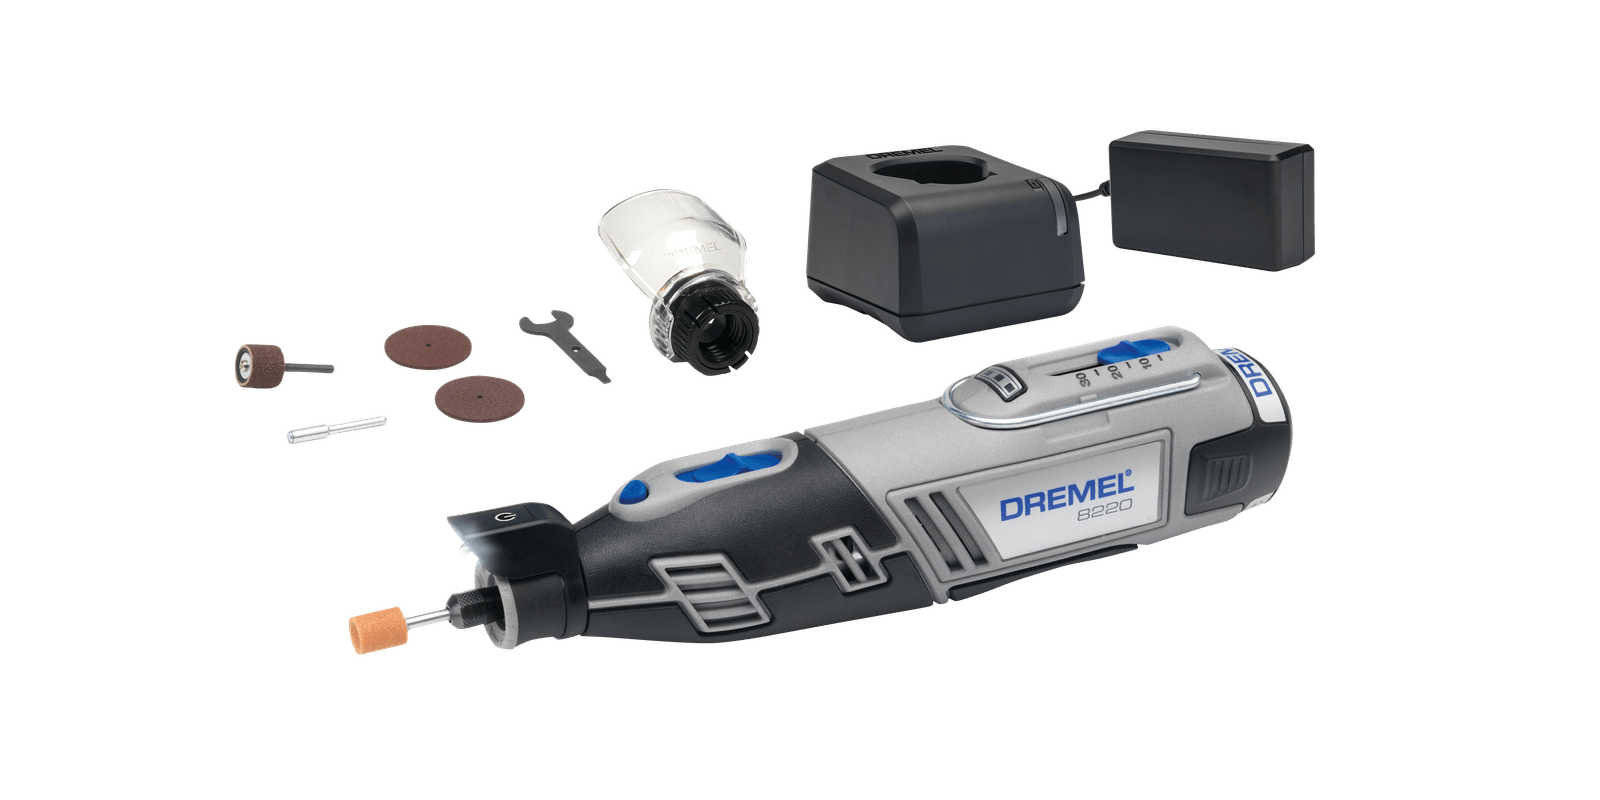 DREMEL® 8220 Utensili a batteria